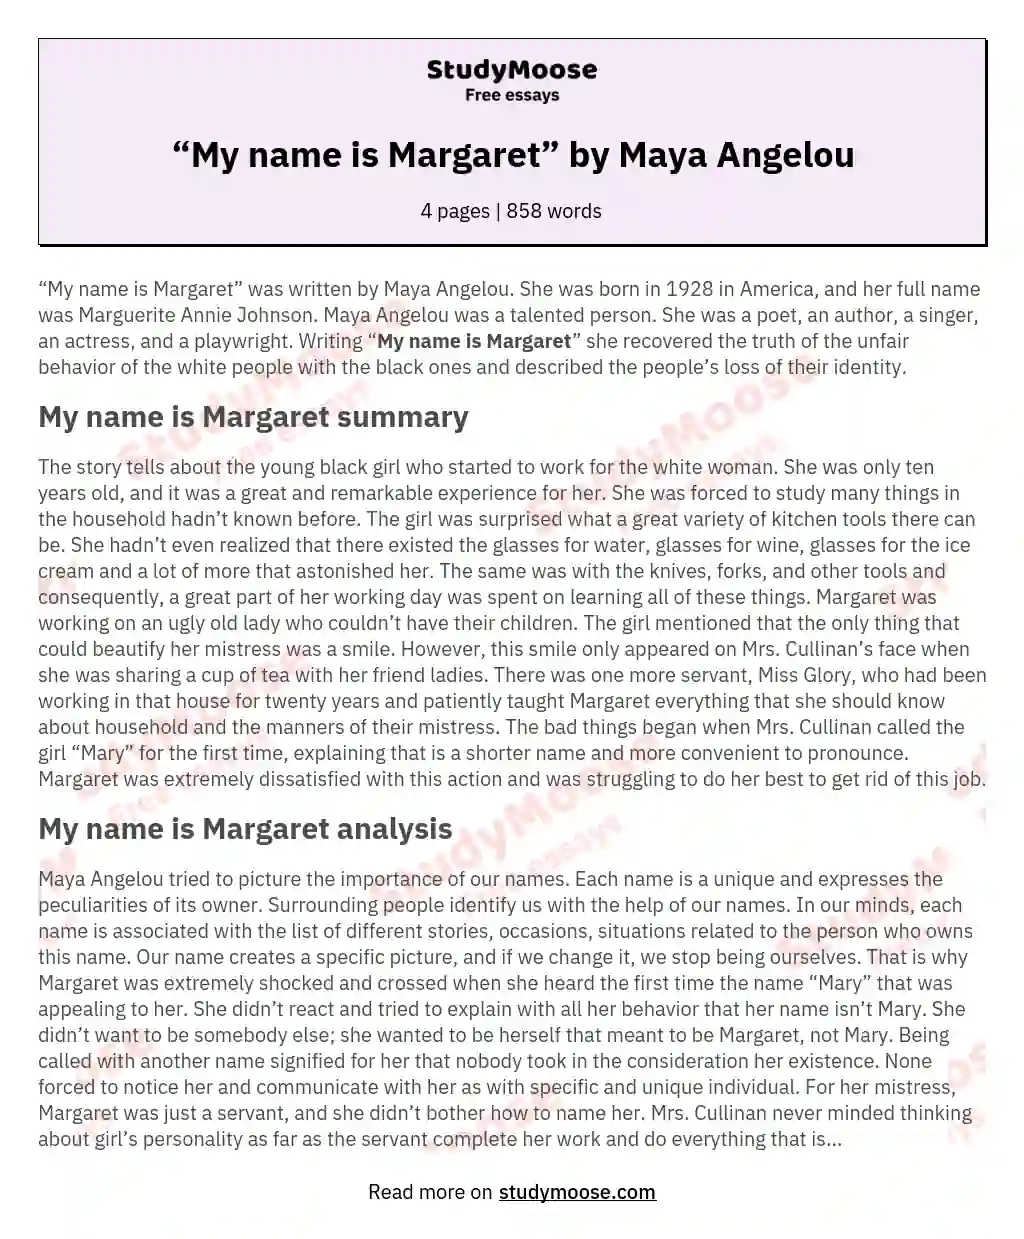 “My name is Margaret” by Maya Angelou